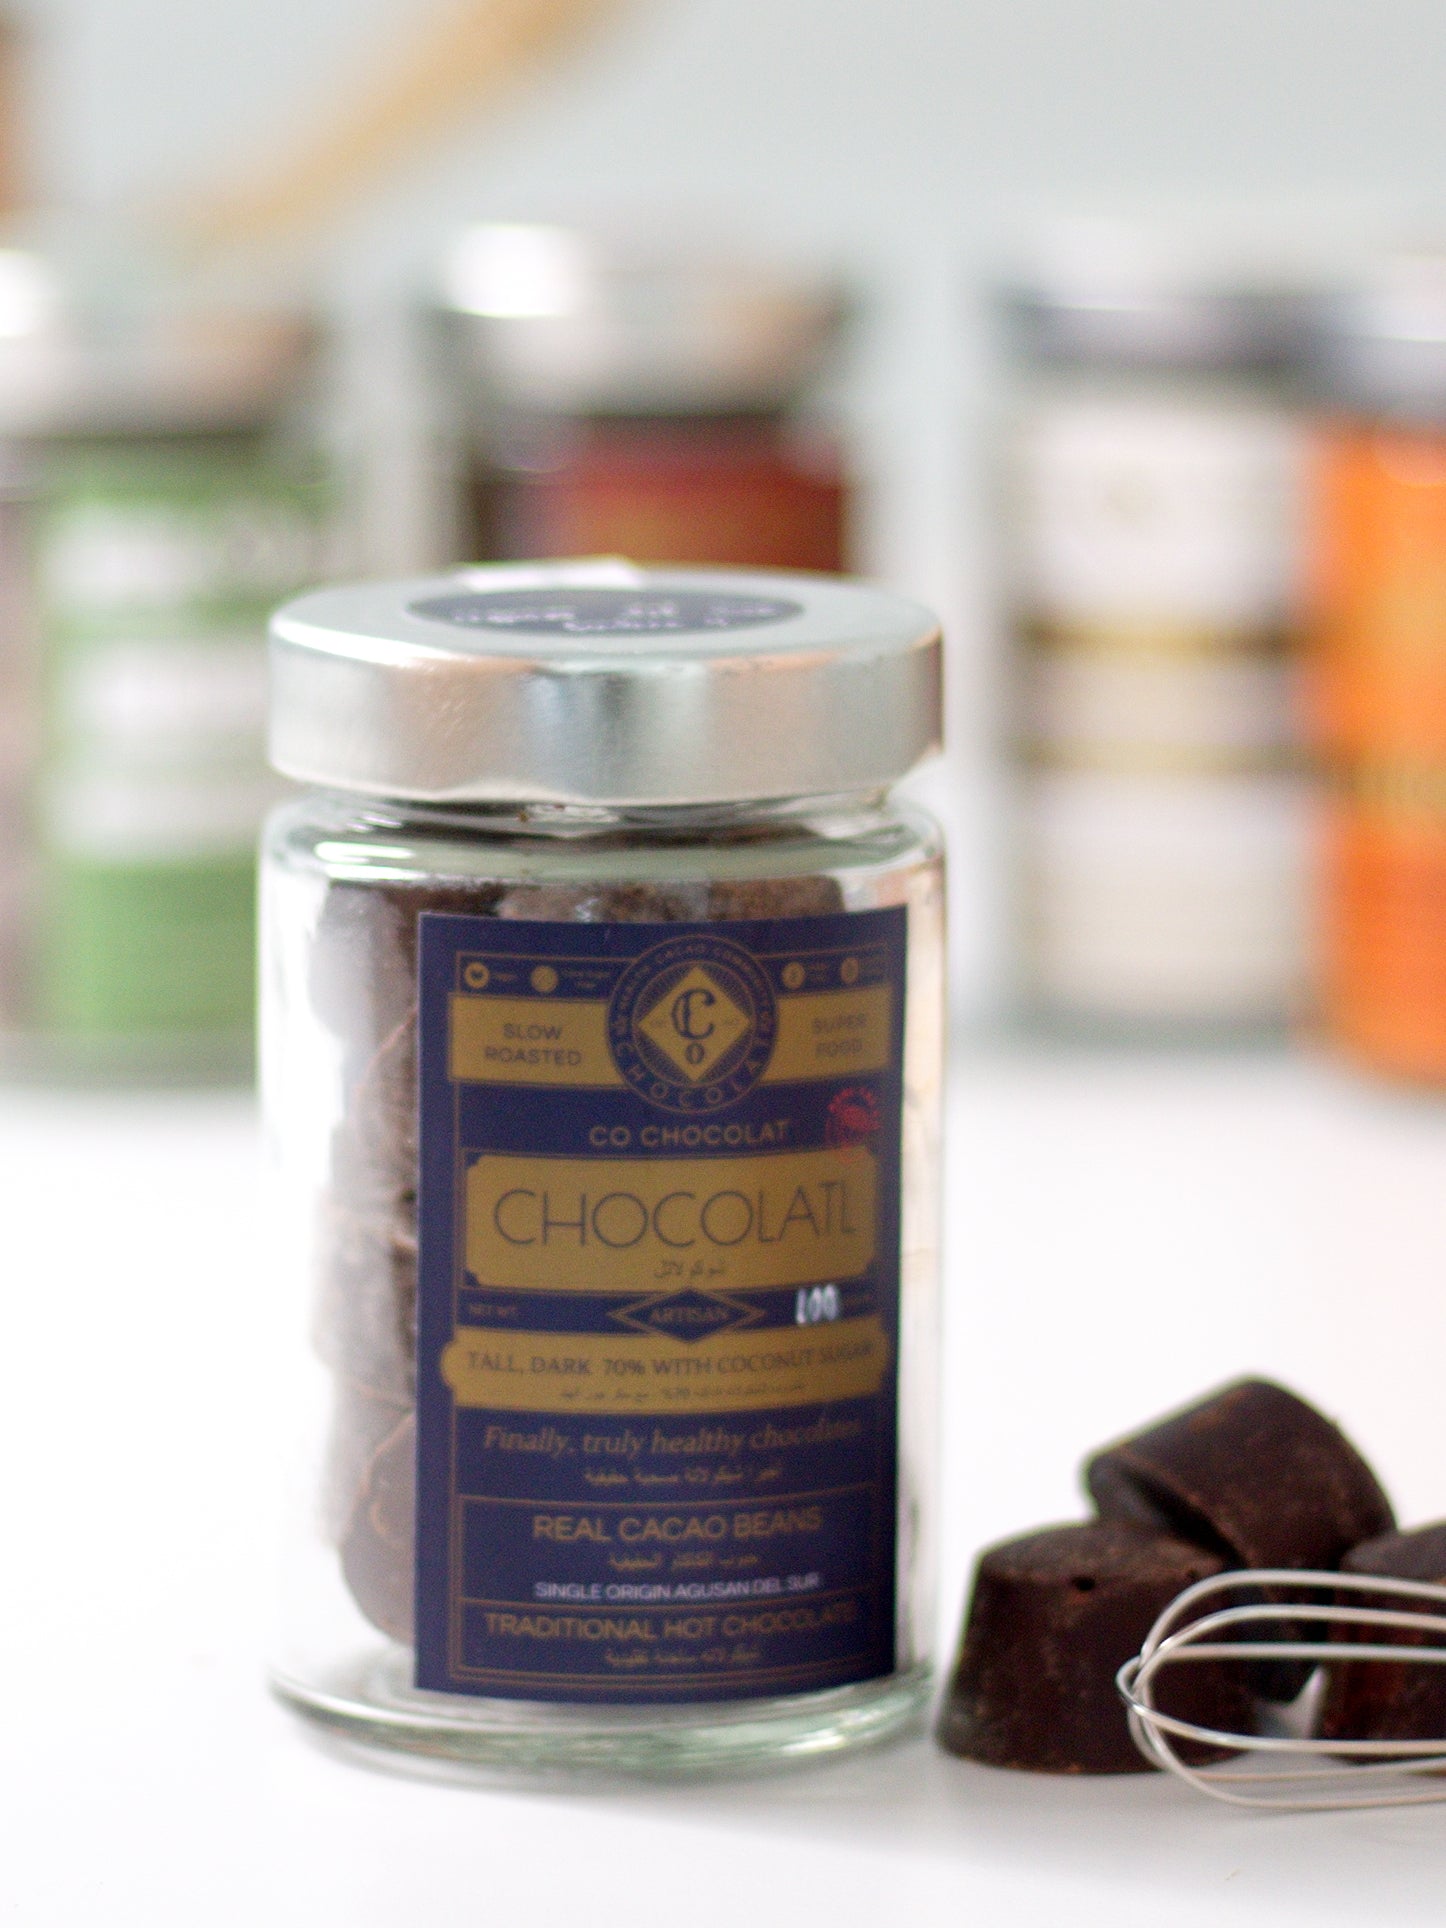 Co Chocolat Tall, Dark 70% with Coconut Sugar Hot Chocolate - Vegan, Refined Sugar-Free, Gluten-Free, Nut-Free 100g Jar